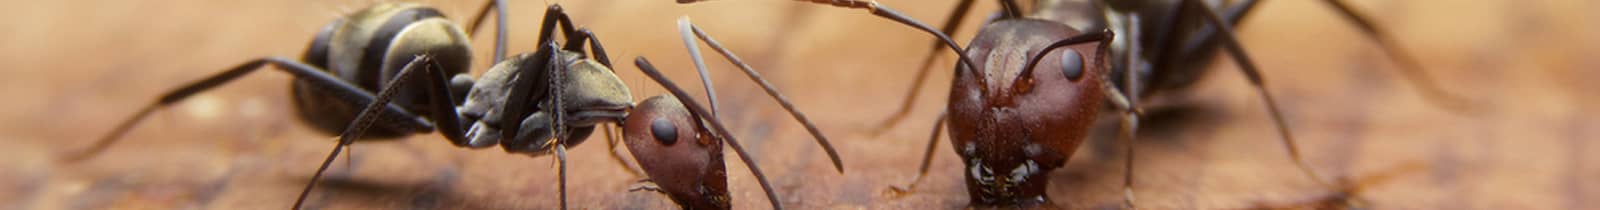 Ant-treatment pest control Boise, Idaho